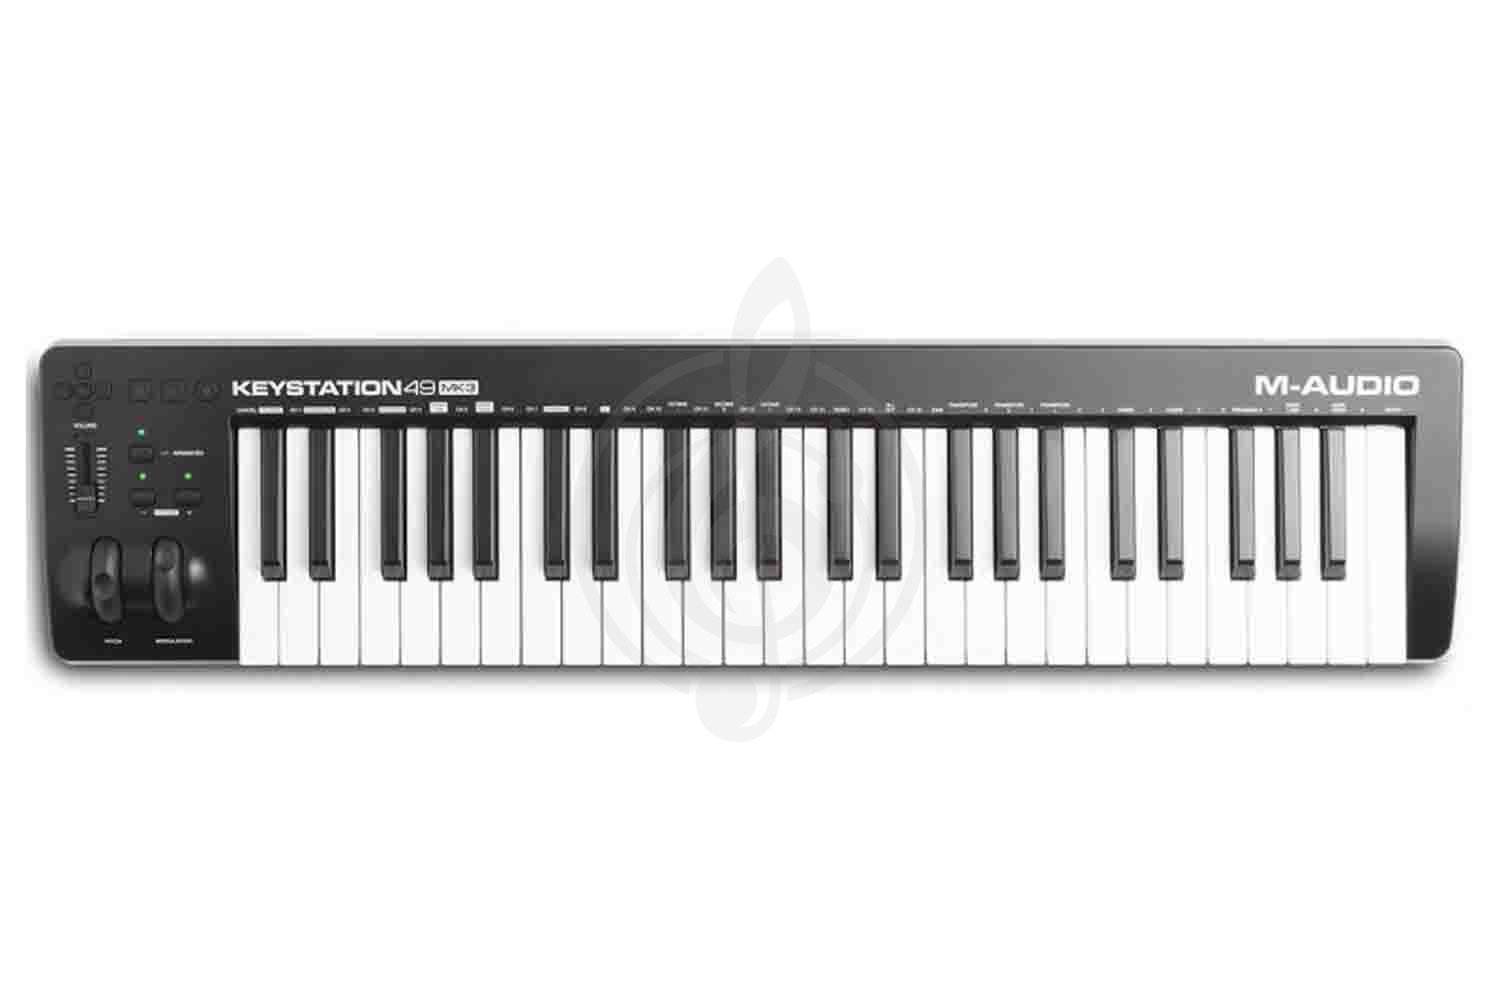 MIDI-клавиатура Миди-клавиатуры M-Audio M-AUDIO Keystation 49 II - USB миди-клавиатура Keystation 49 II - фото 1